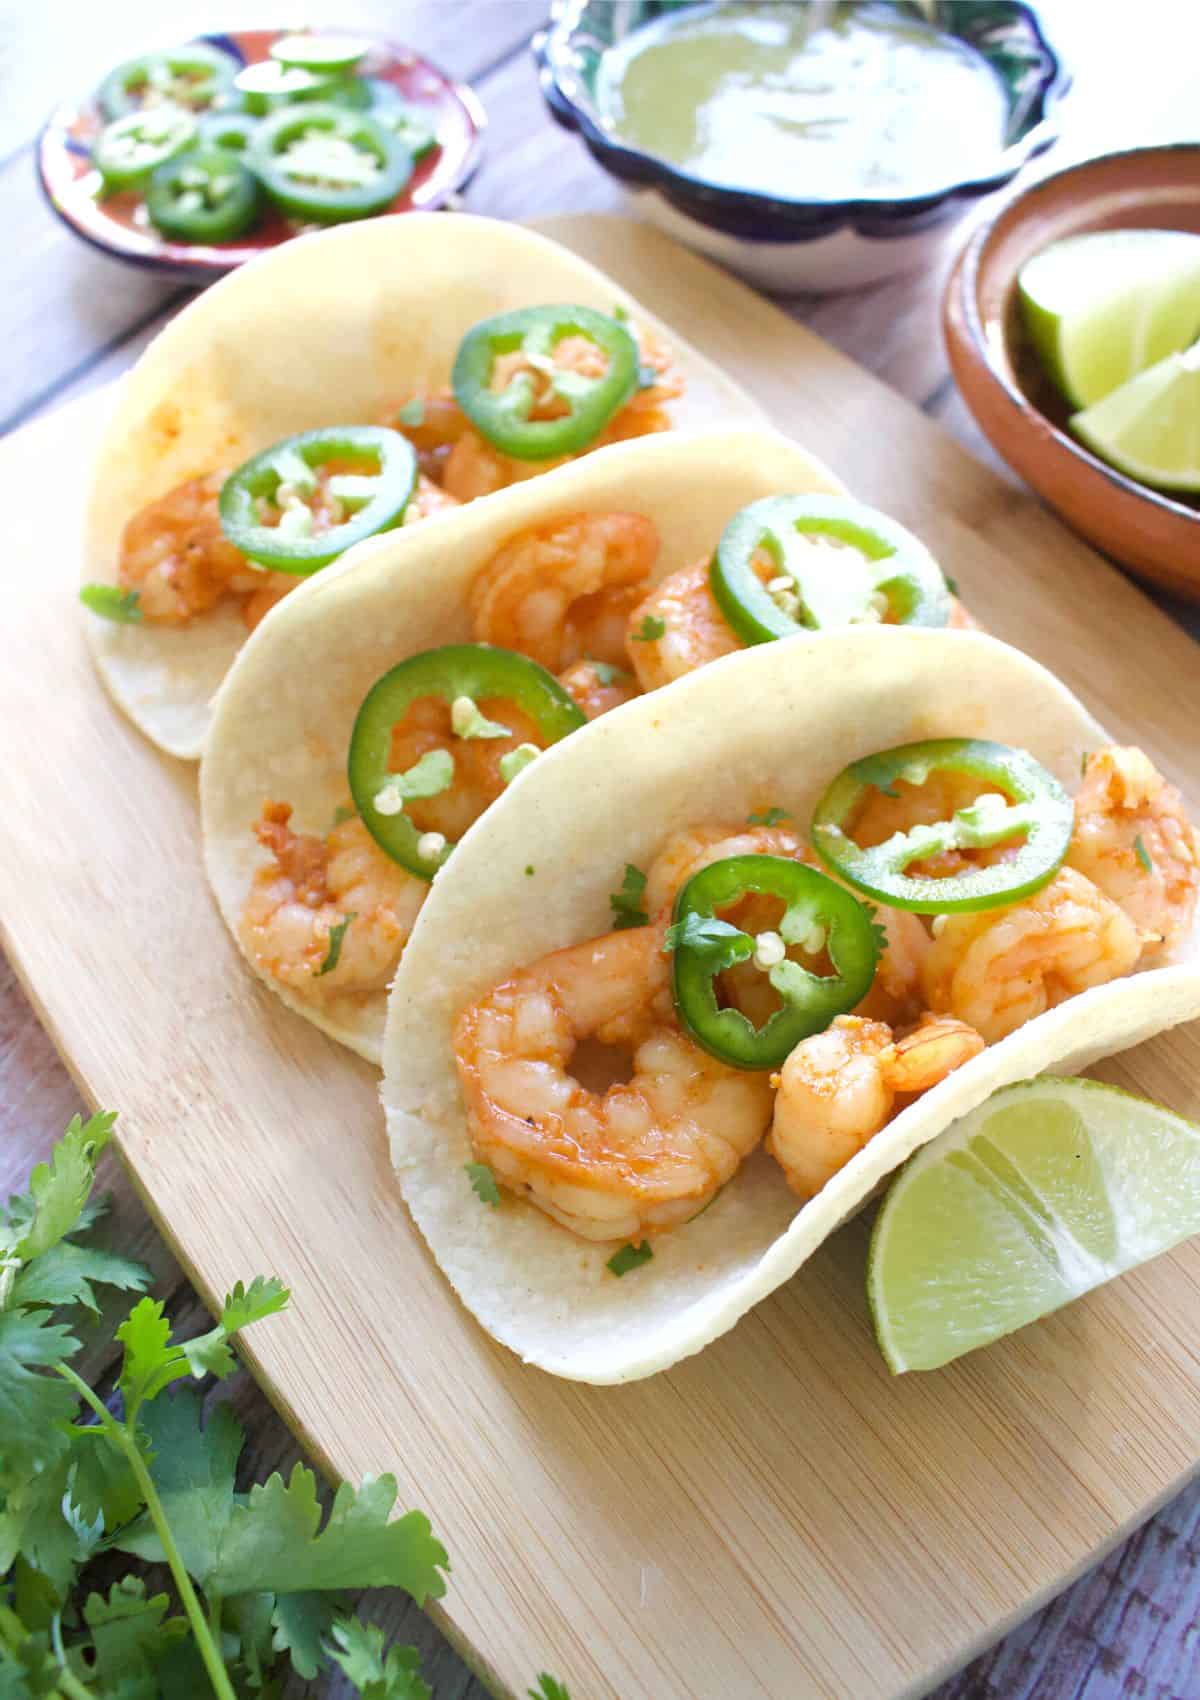 Tacos de Camaron (Shrimp Tacos) - Mamá Maggie's Kitchen